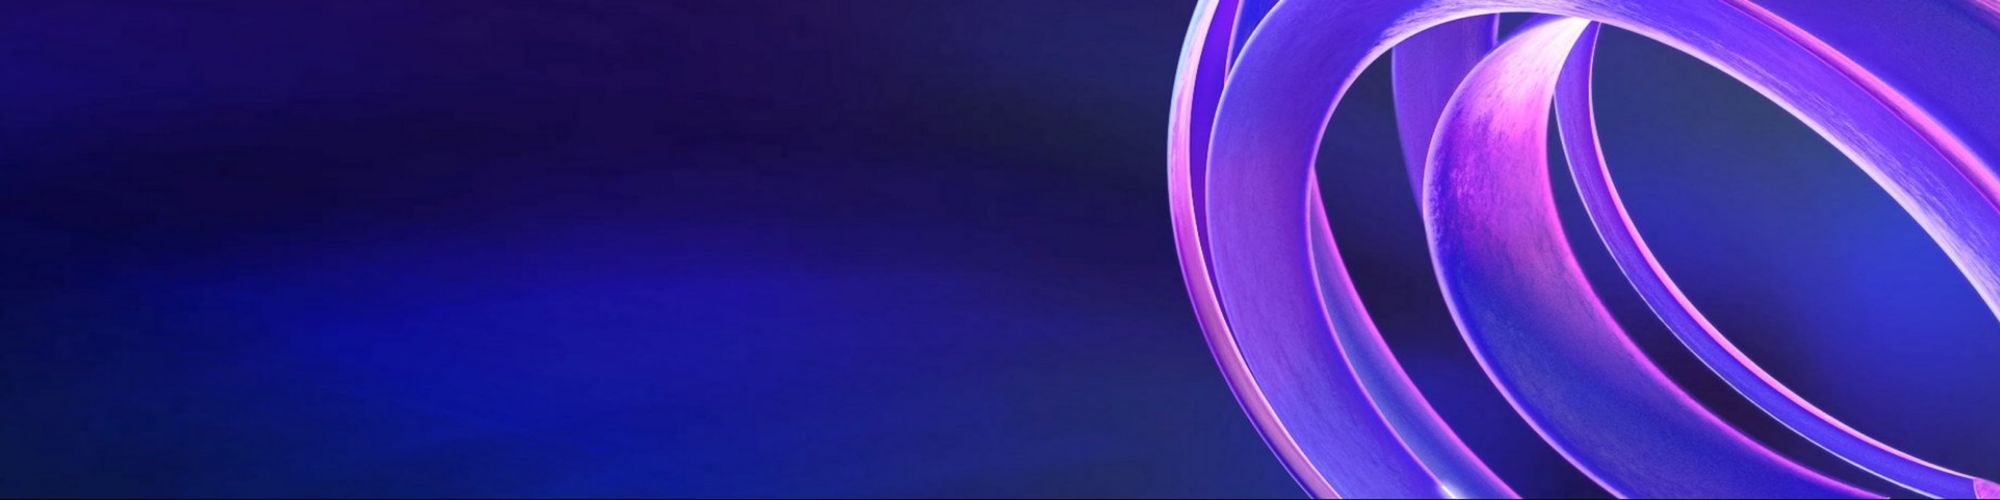 purple circular